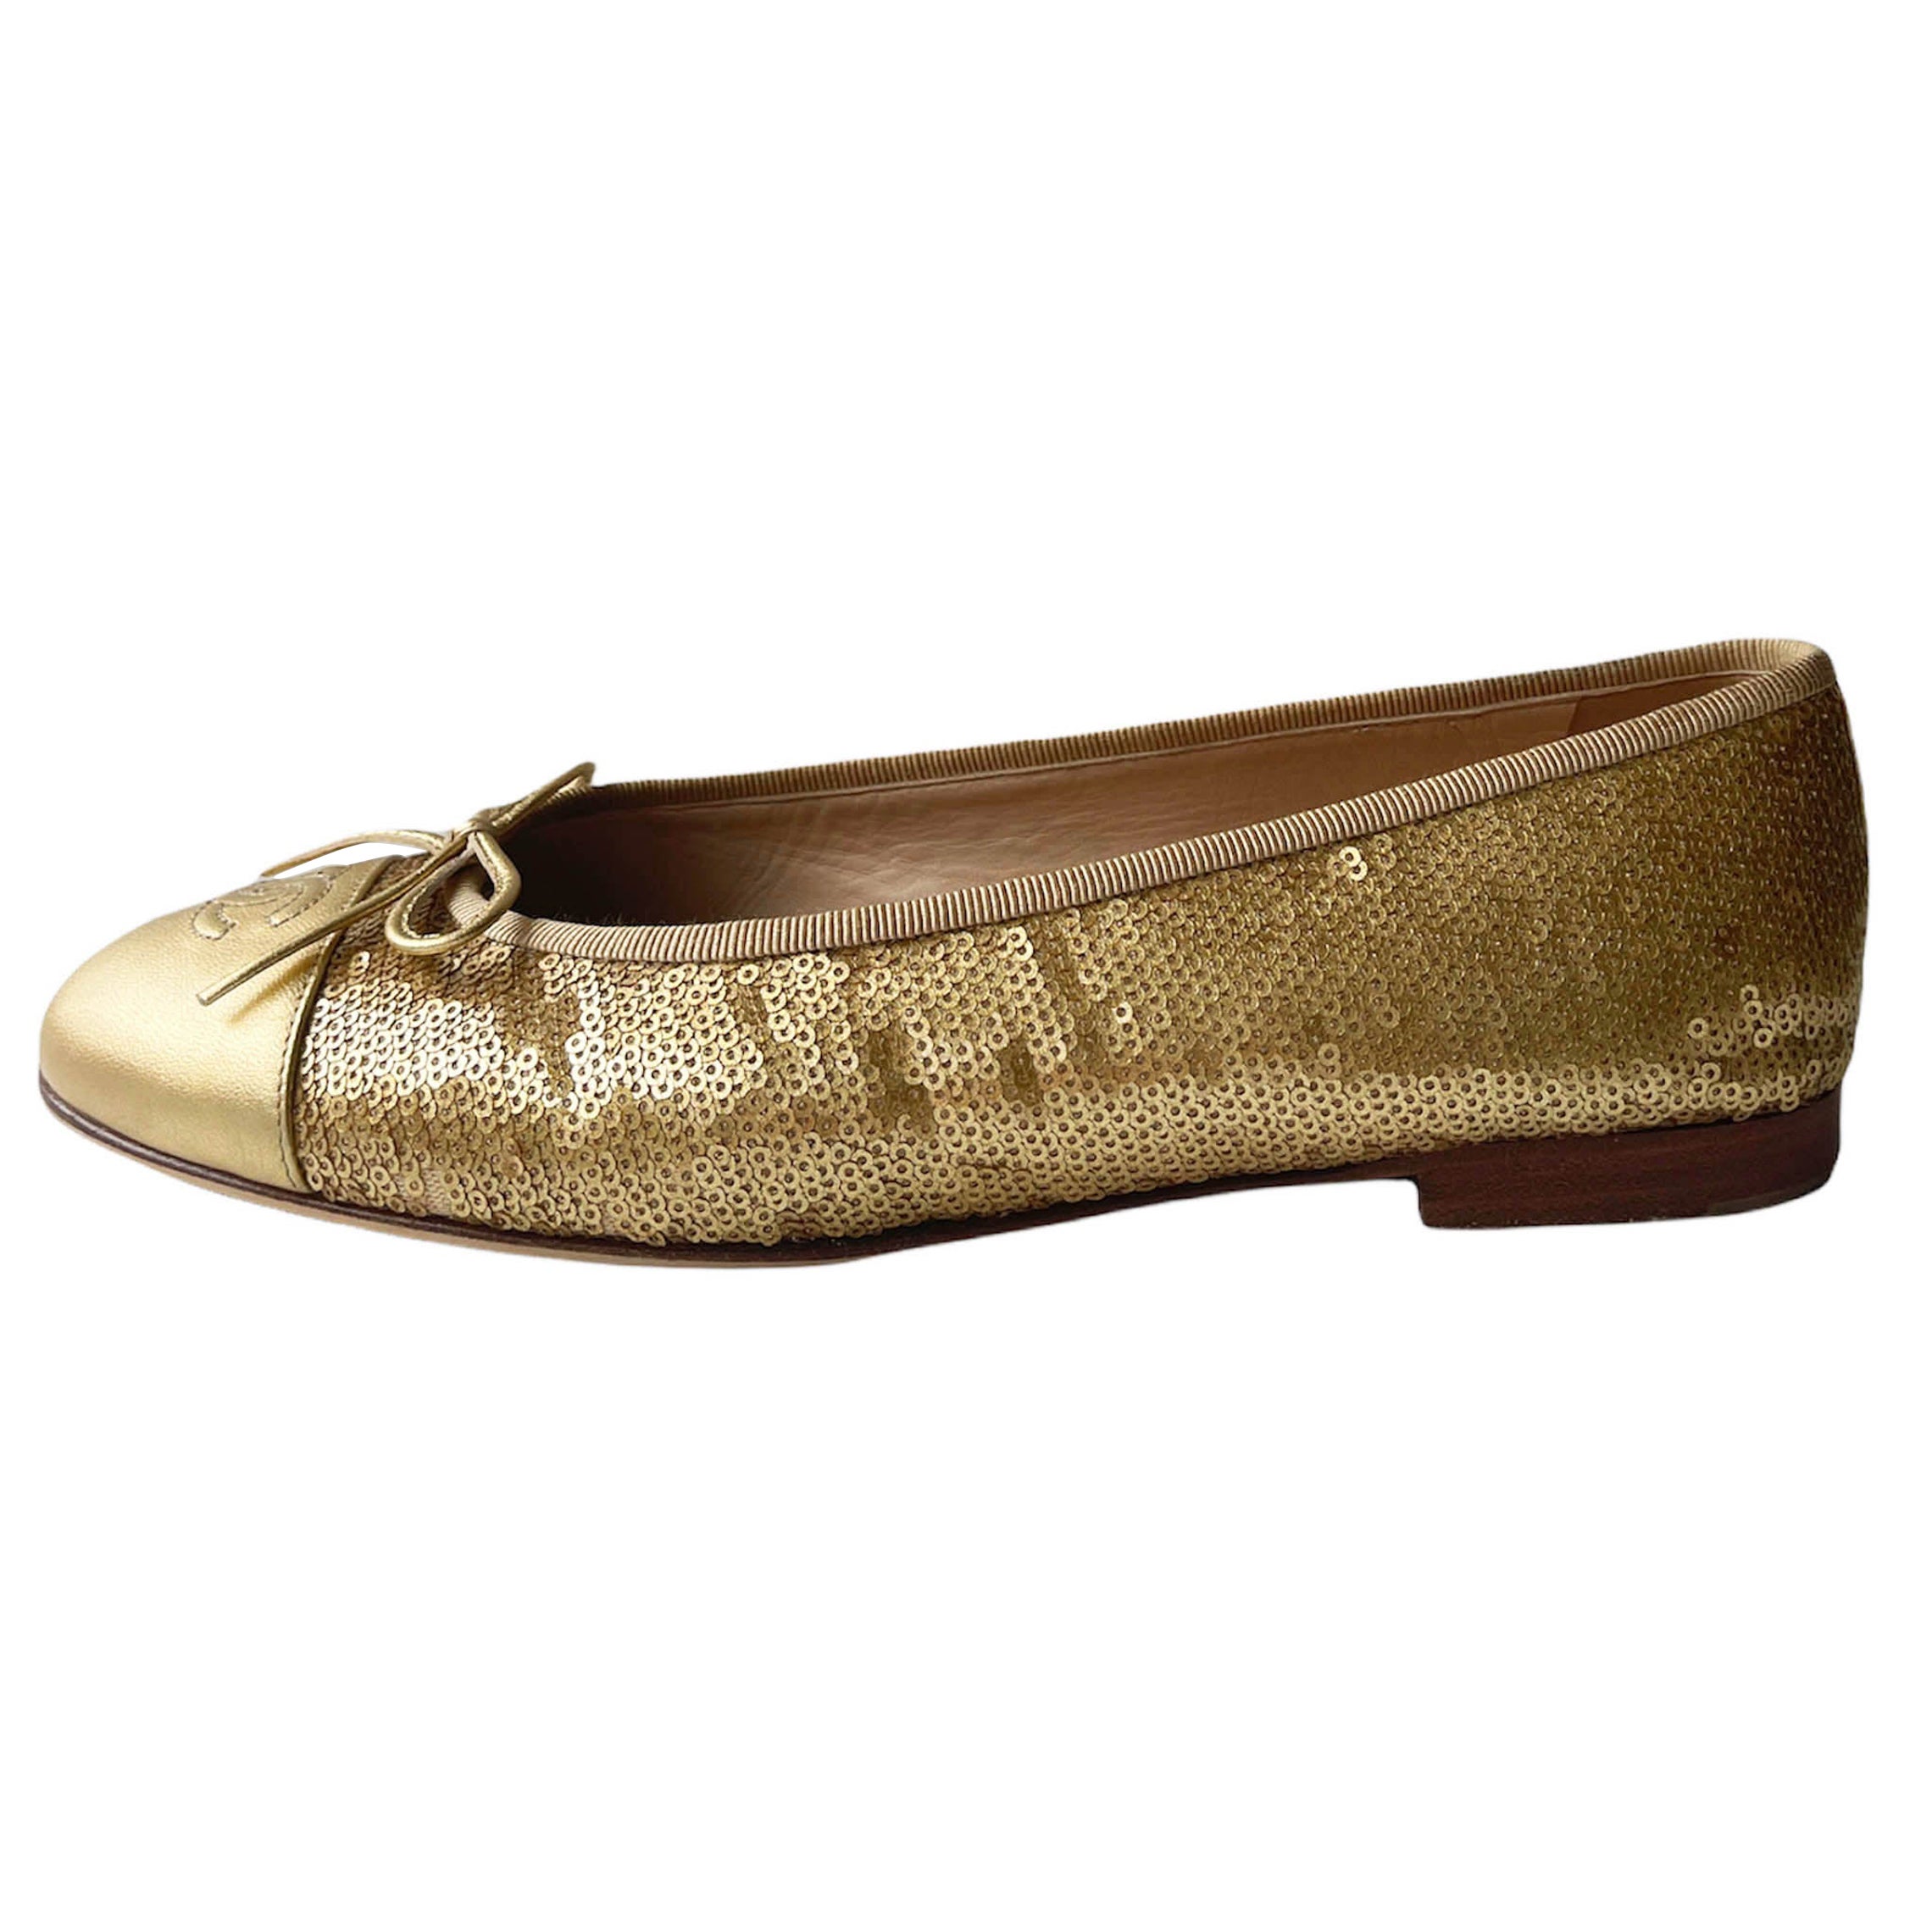 Chanel Gold Sequin/Leather Cap Toe CC Ballerina Flats sz 39.5